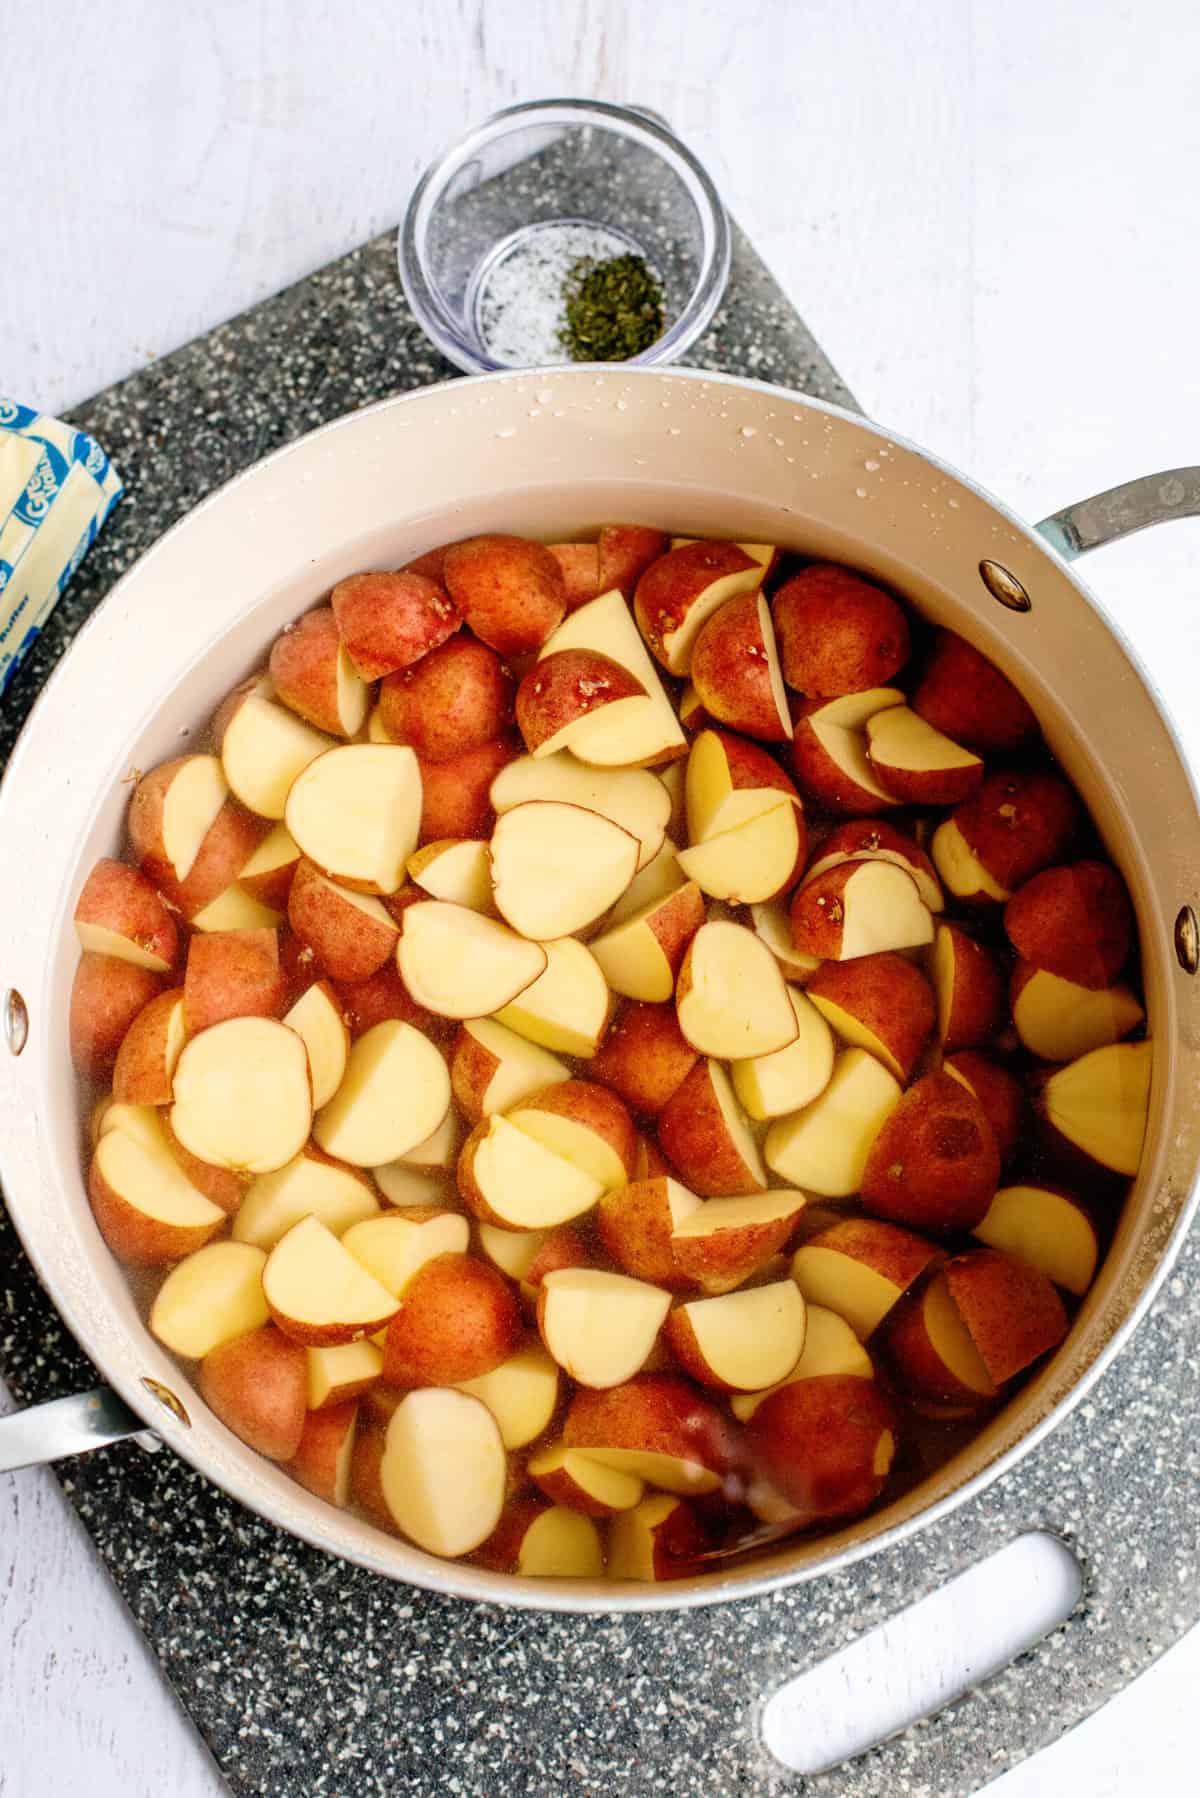 boil new potatoes